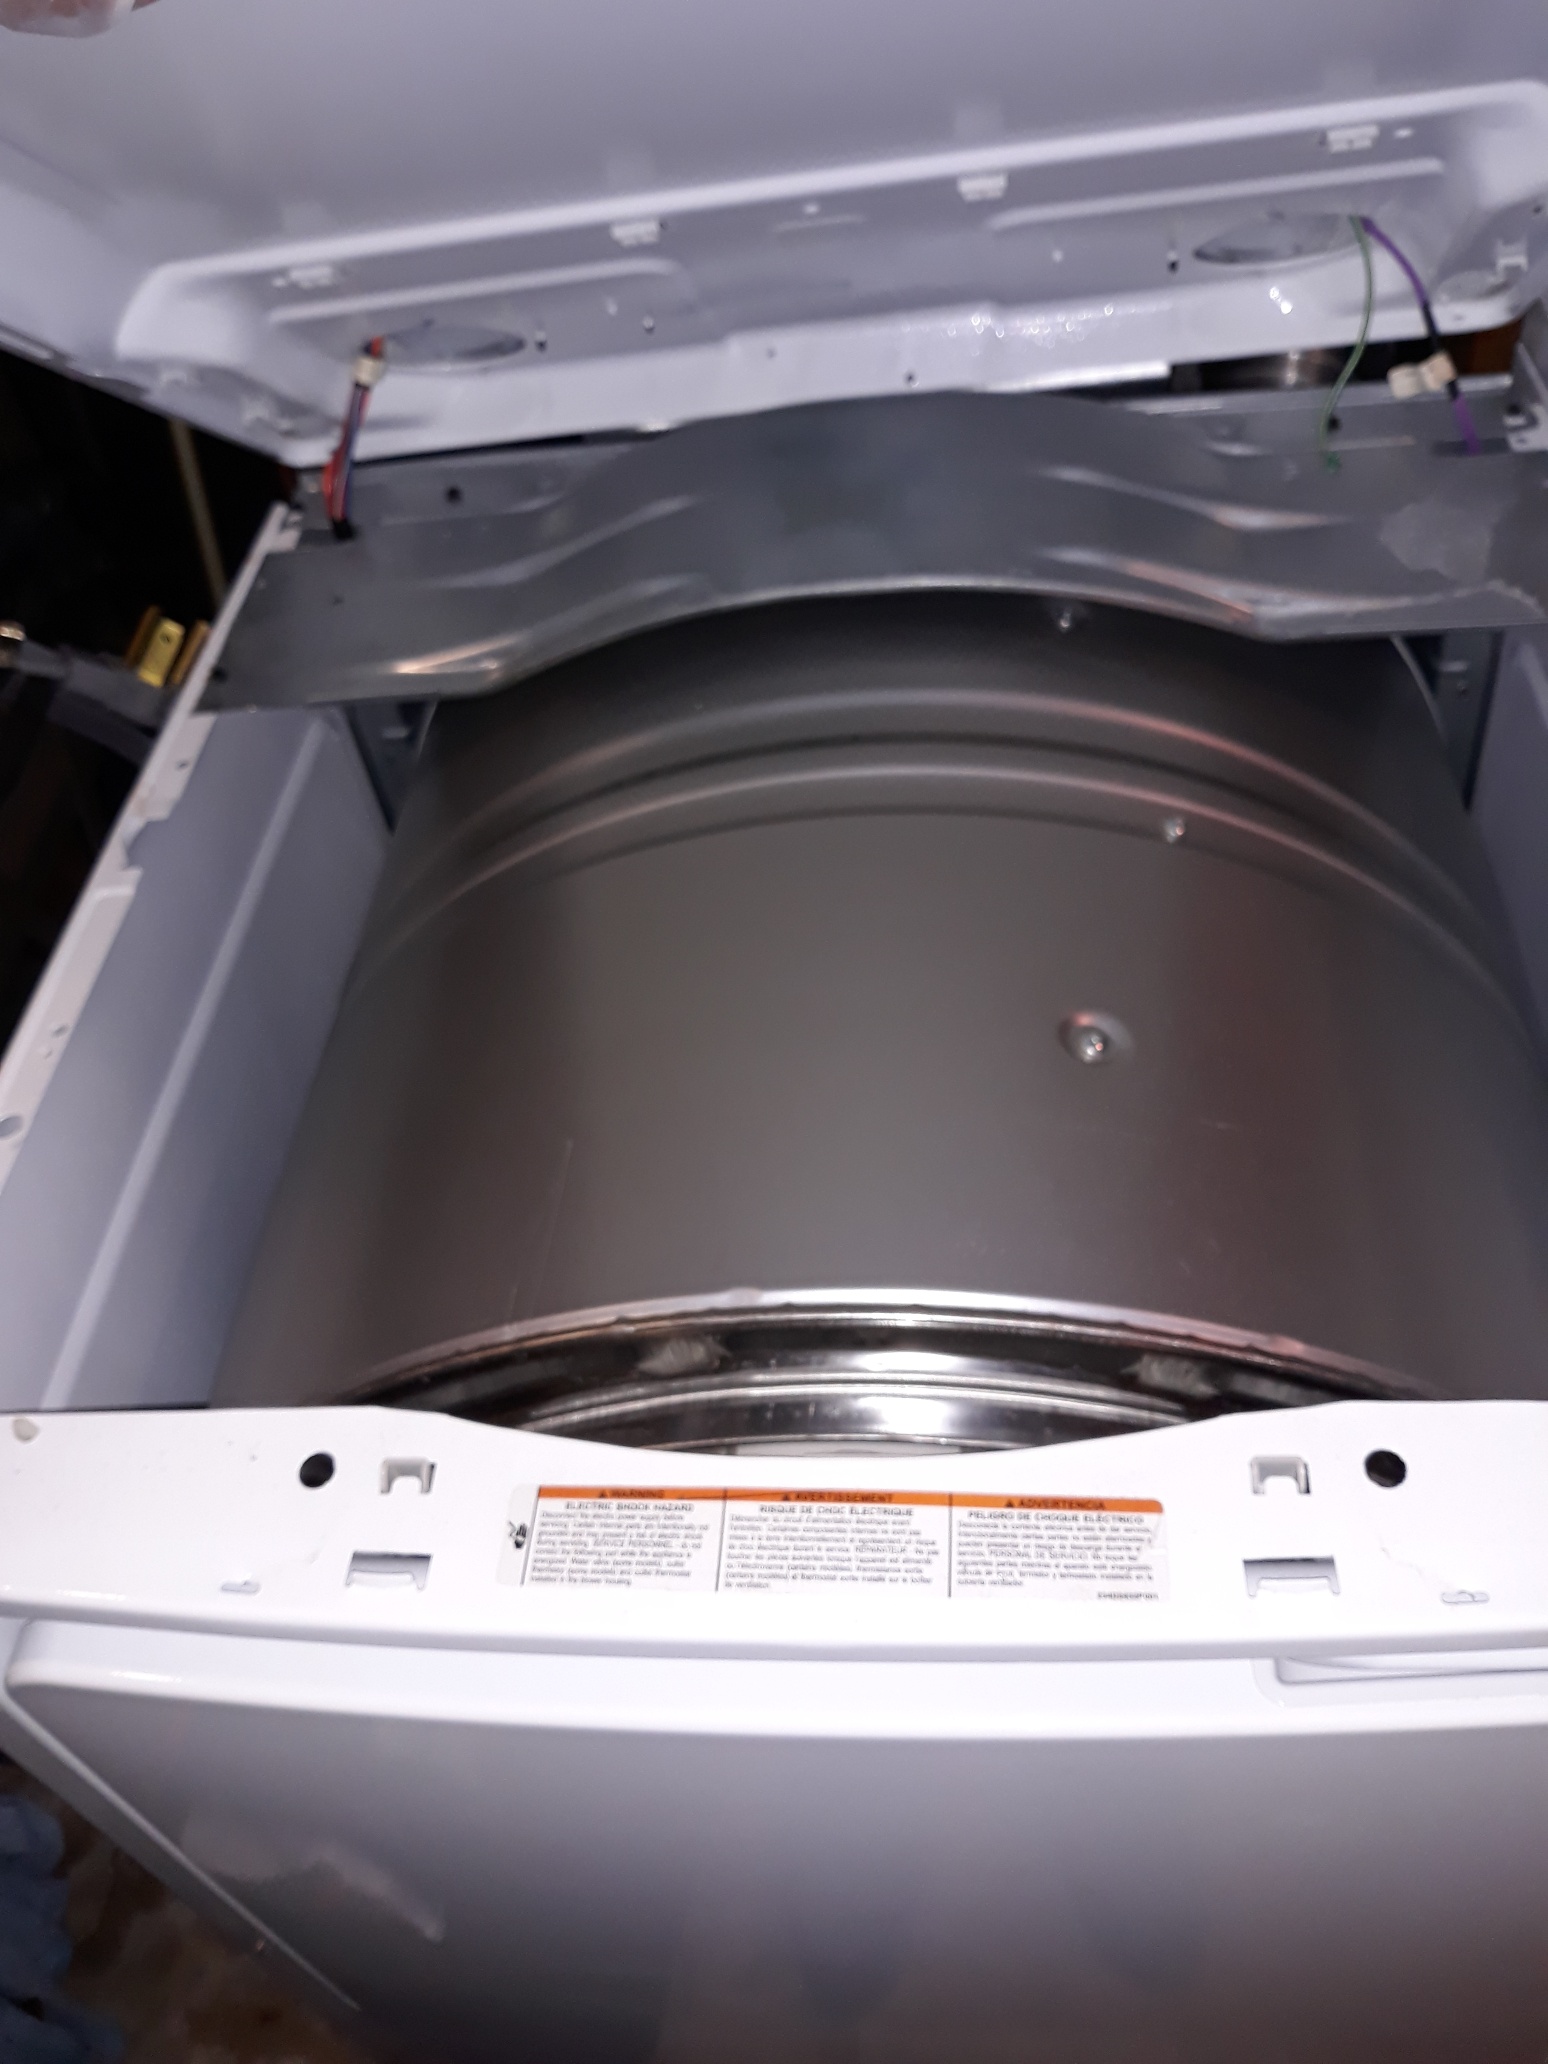 appliance repair dryer repair replacement of the broken drum belt ne 36 st oxford fl 34484